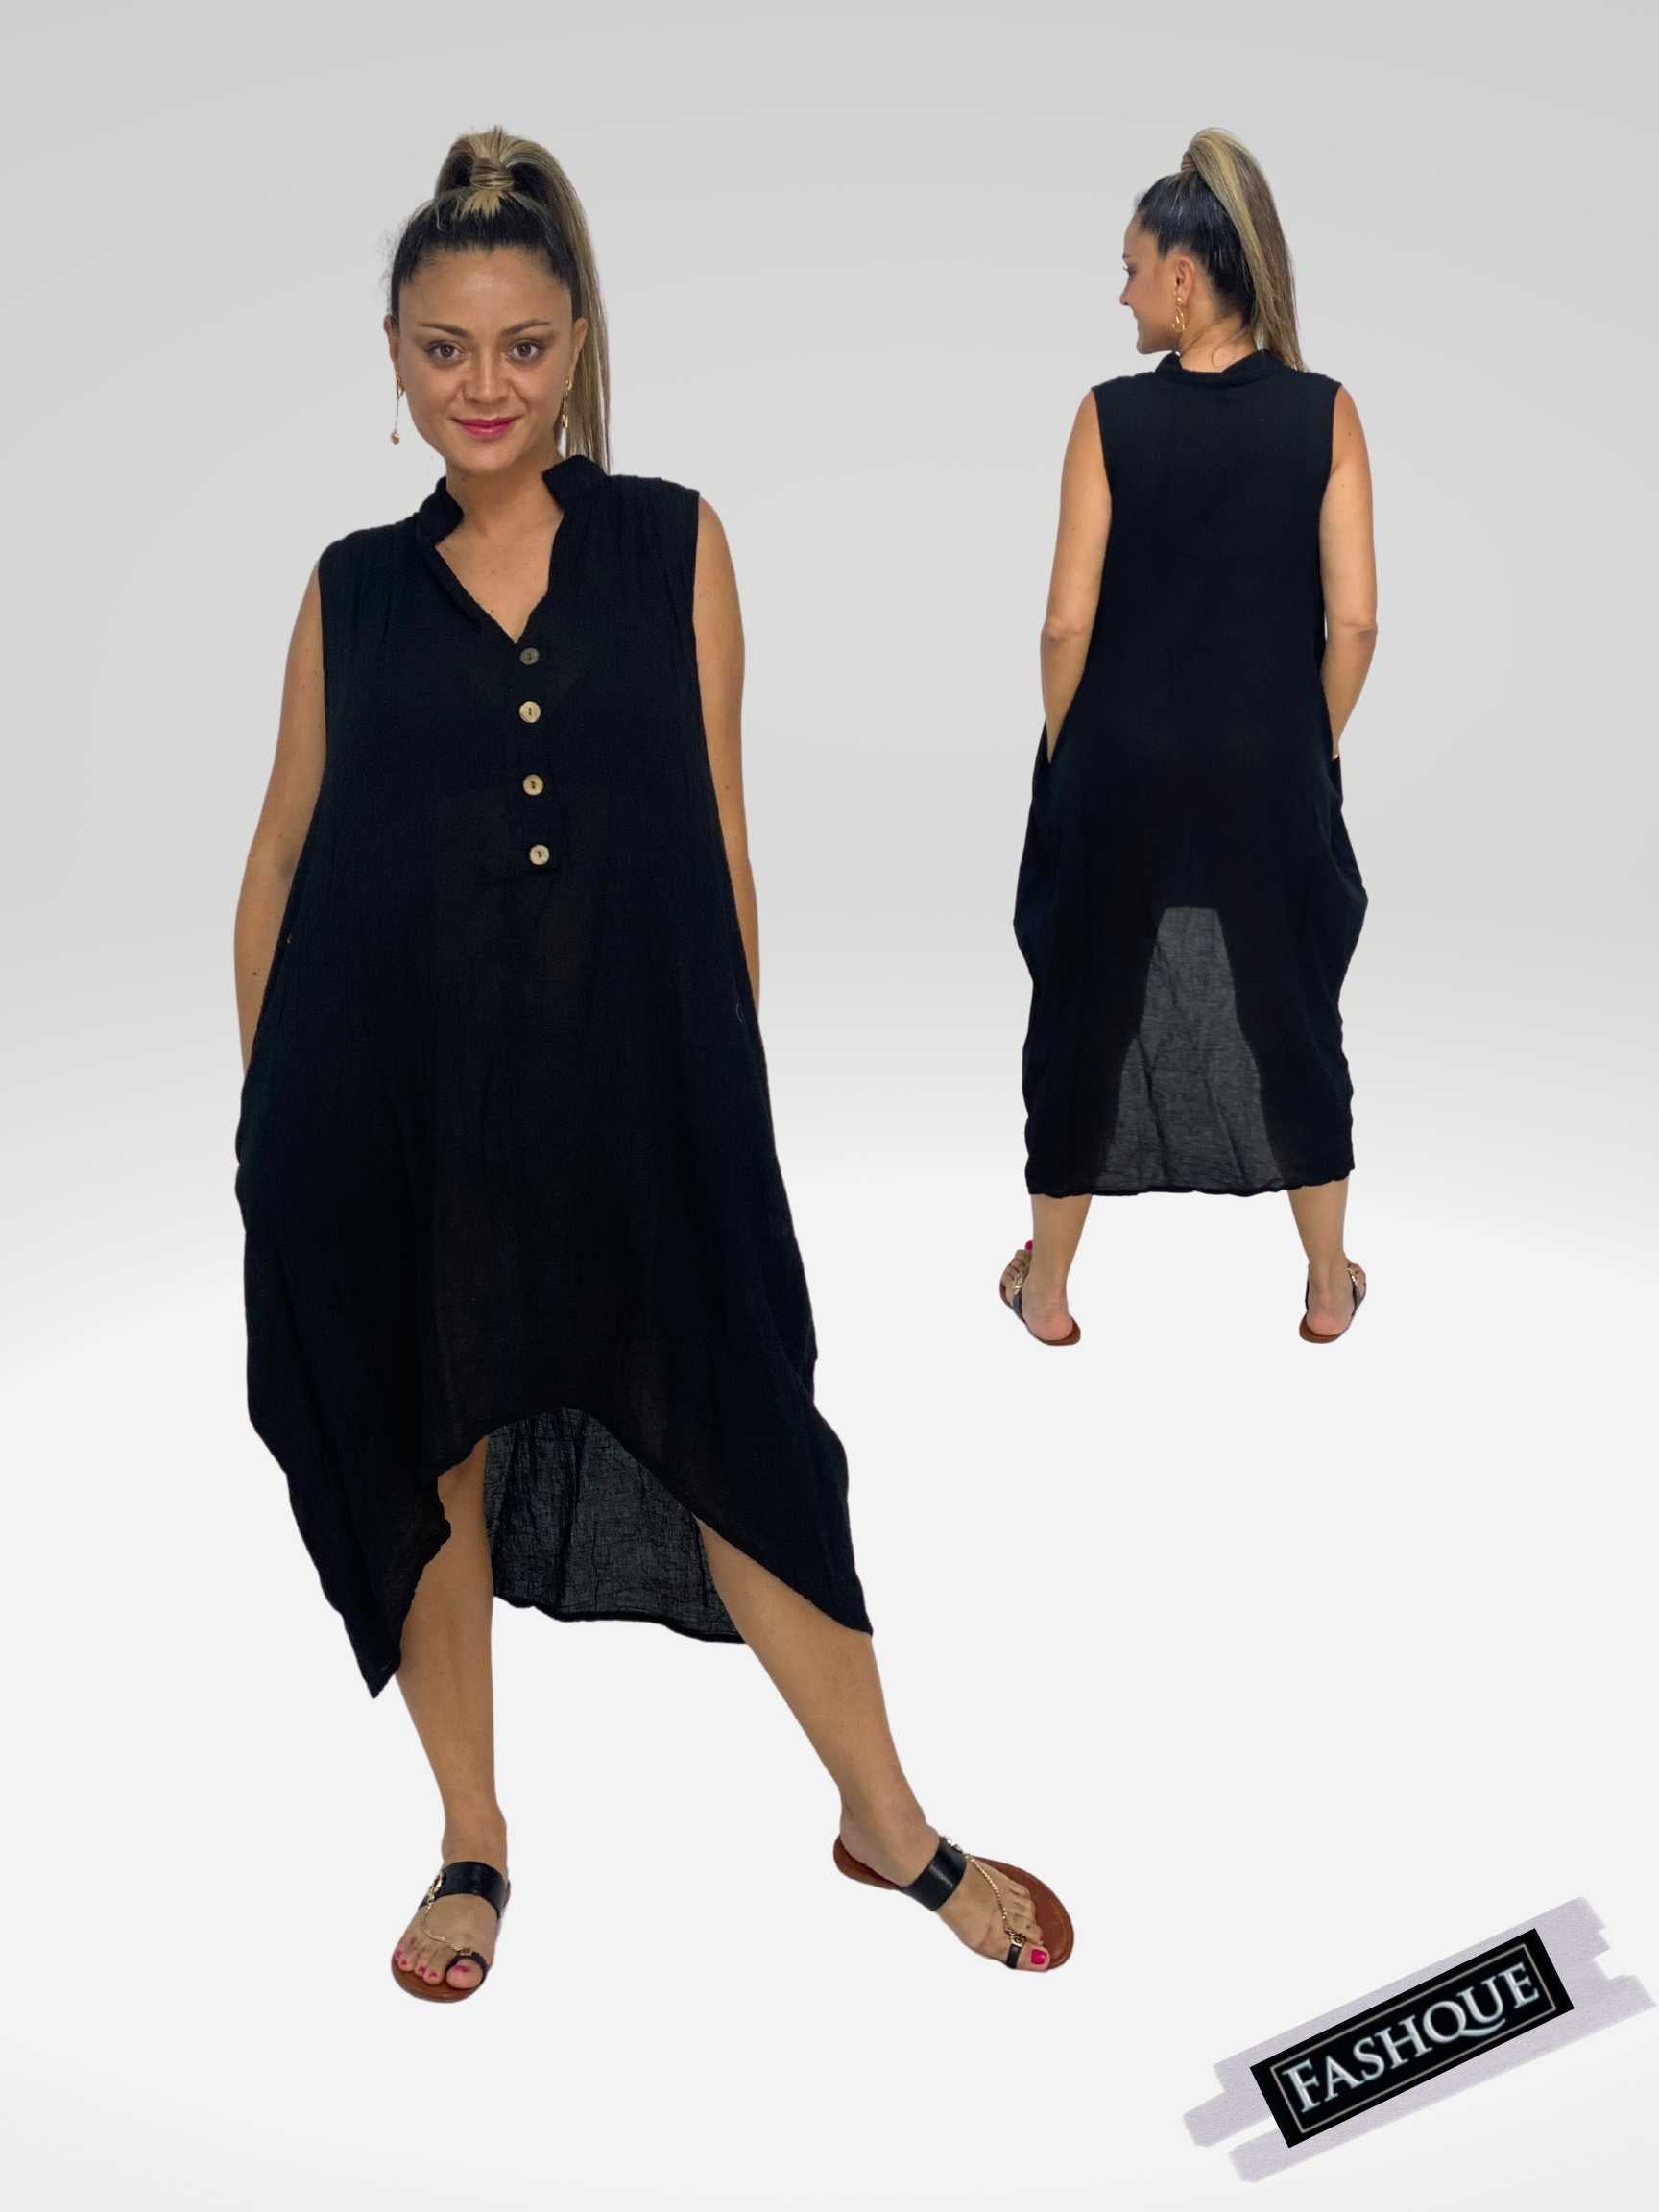 FASHQUE - Dress come Bikini Bathing Suit Beach Cover Ups shirt with Pockets - D6249